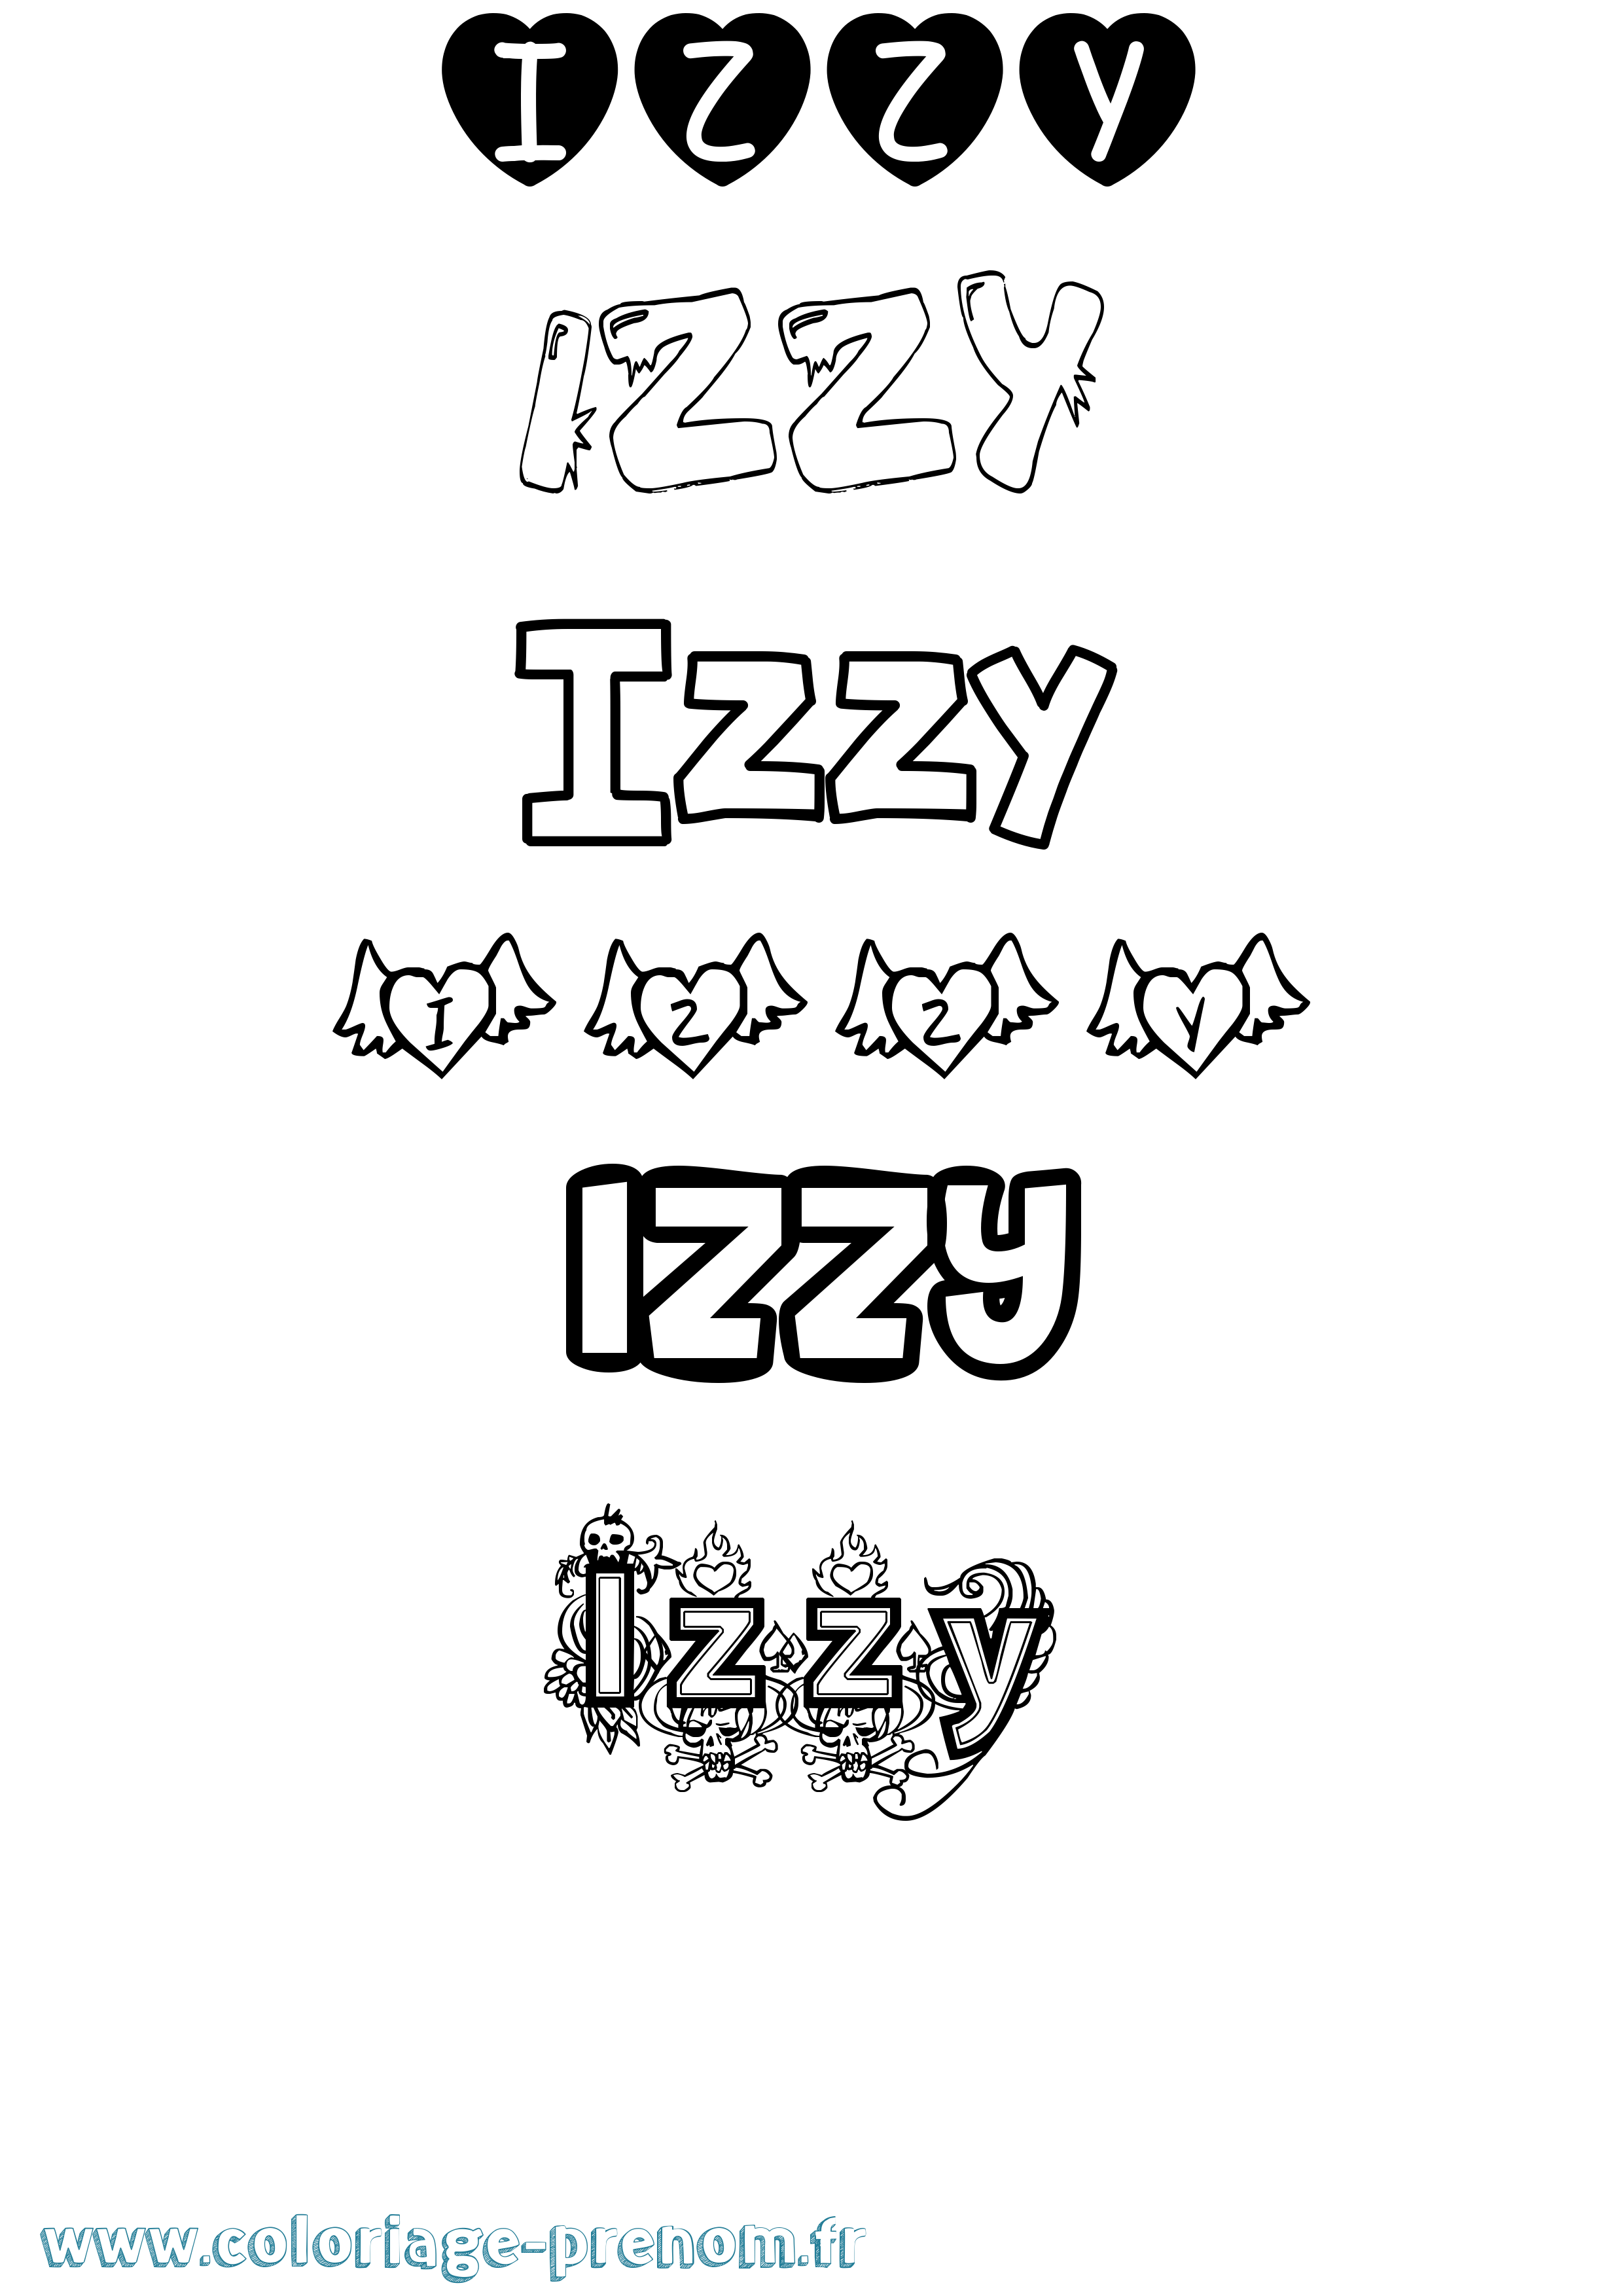 Coloriage prénom Izzy Girly